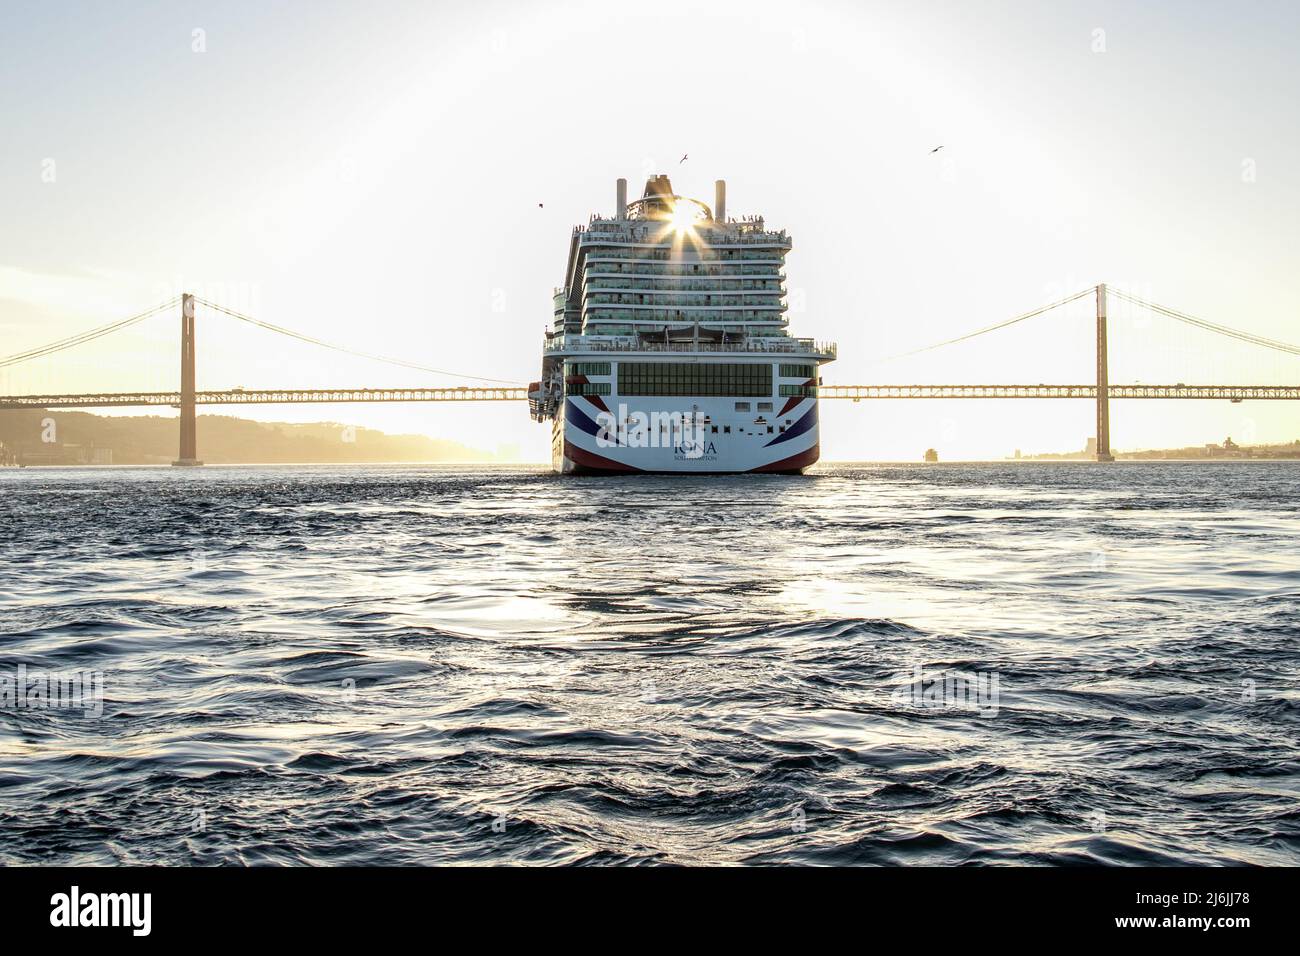 Iona Southampton Cruise Ship Stock Photo